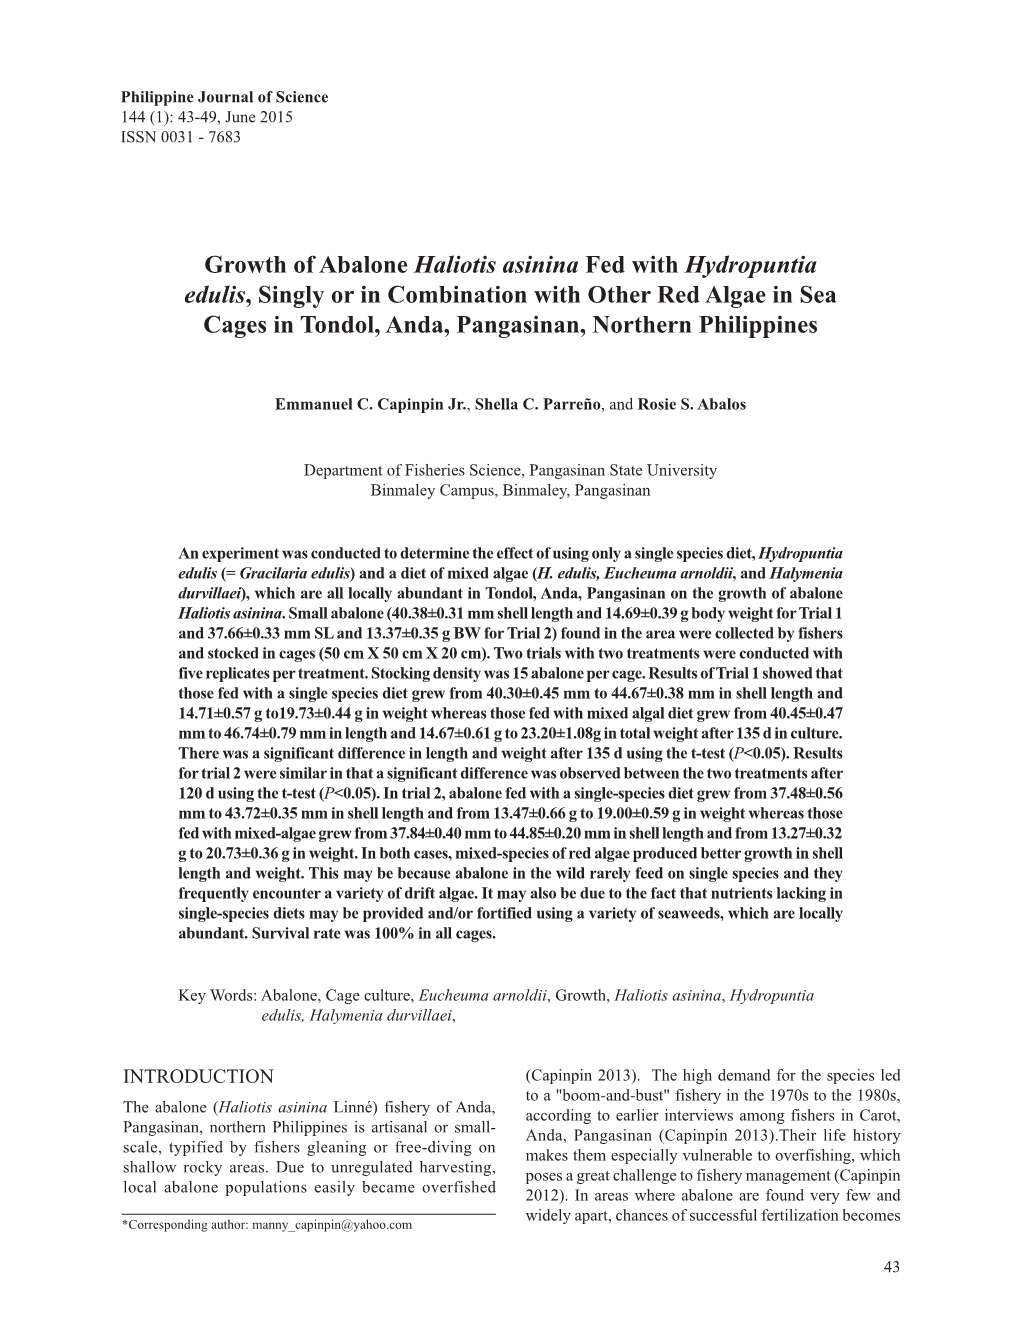 Growth of Abalone Haliotis Asinina Fed with Hydropuntia Edulis, Singly